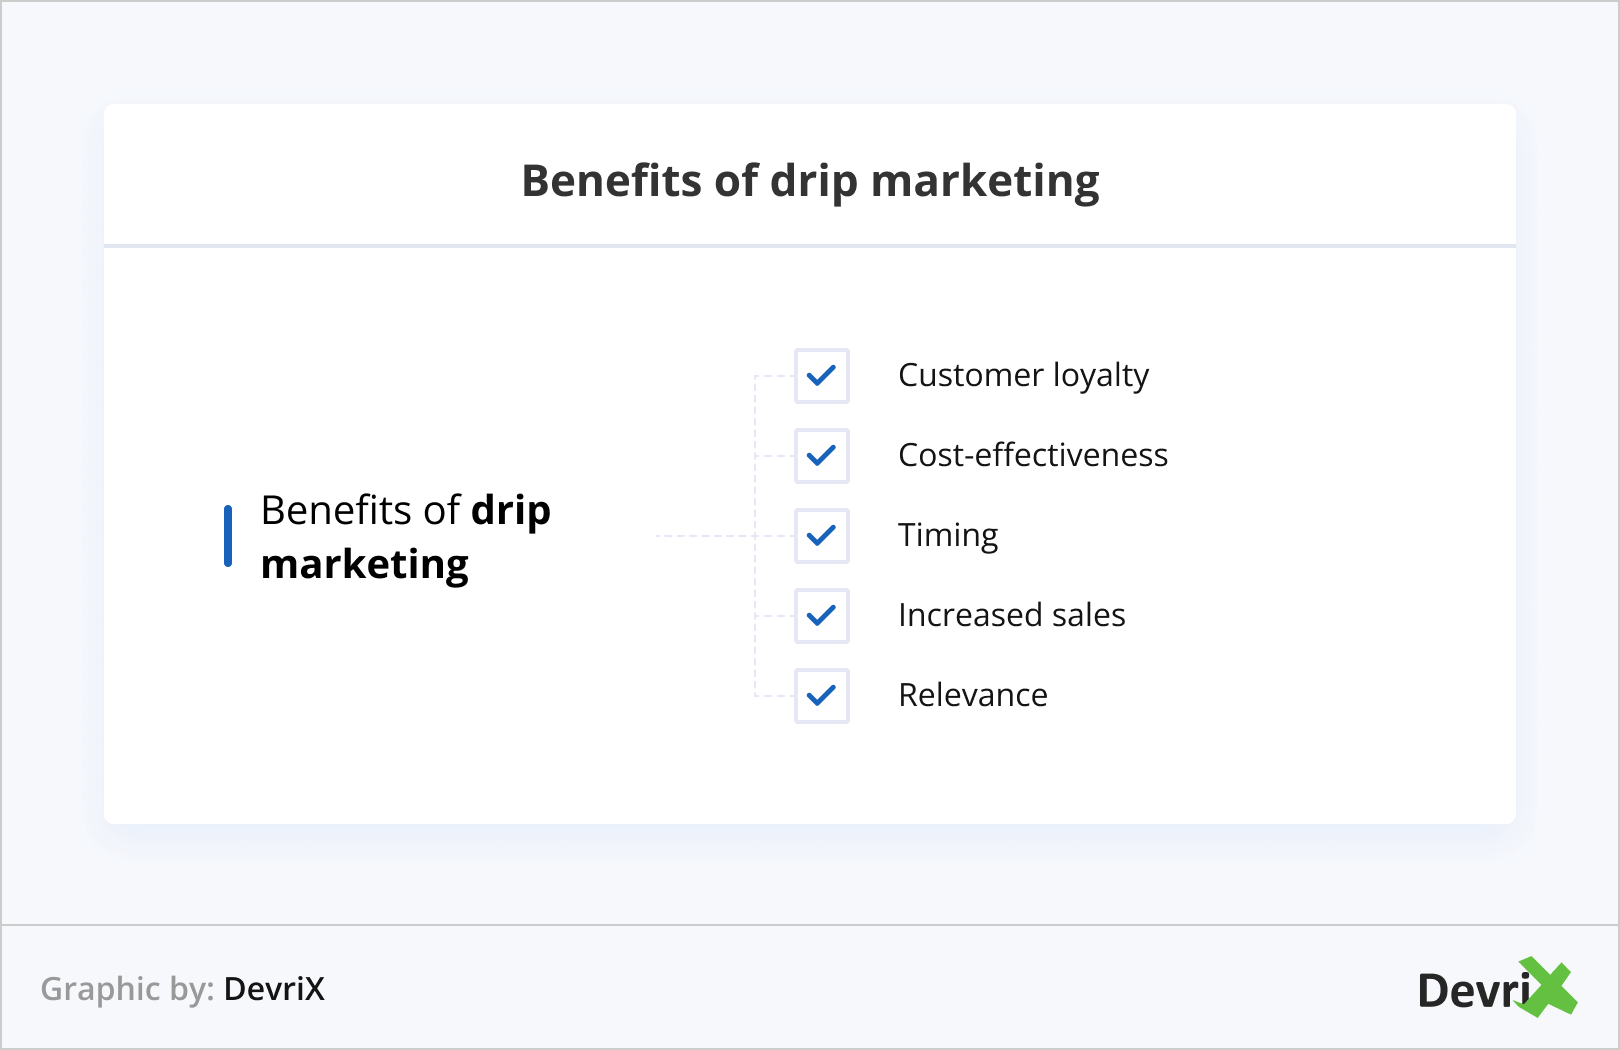 Benefits of drip marketing